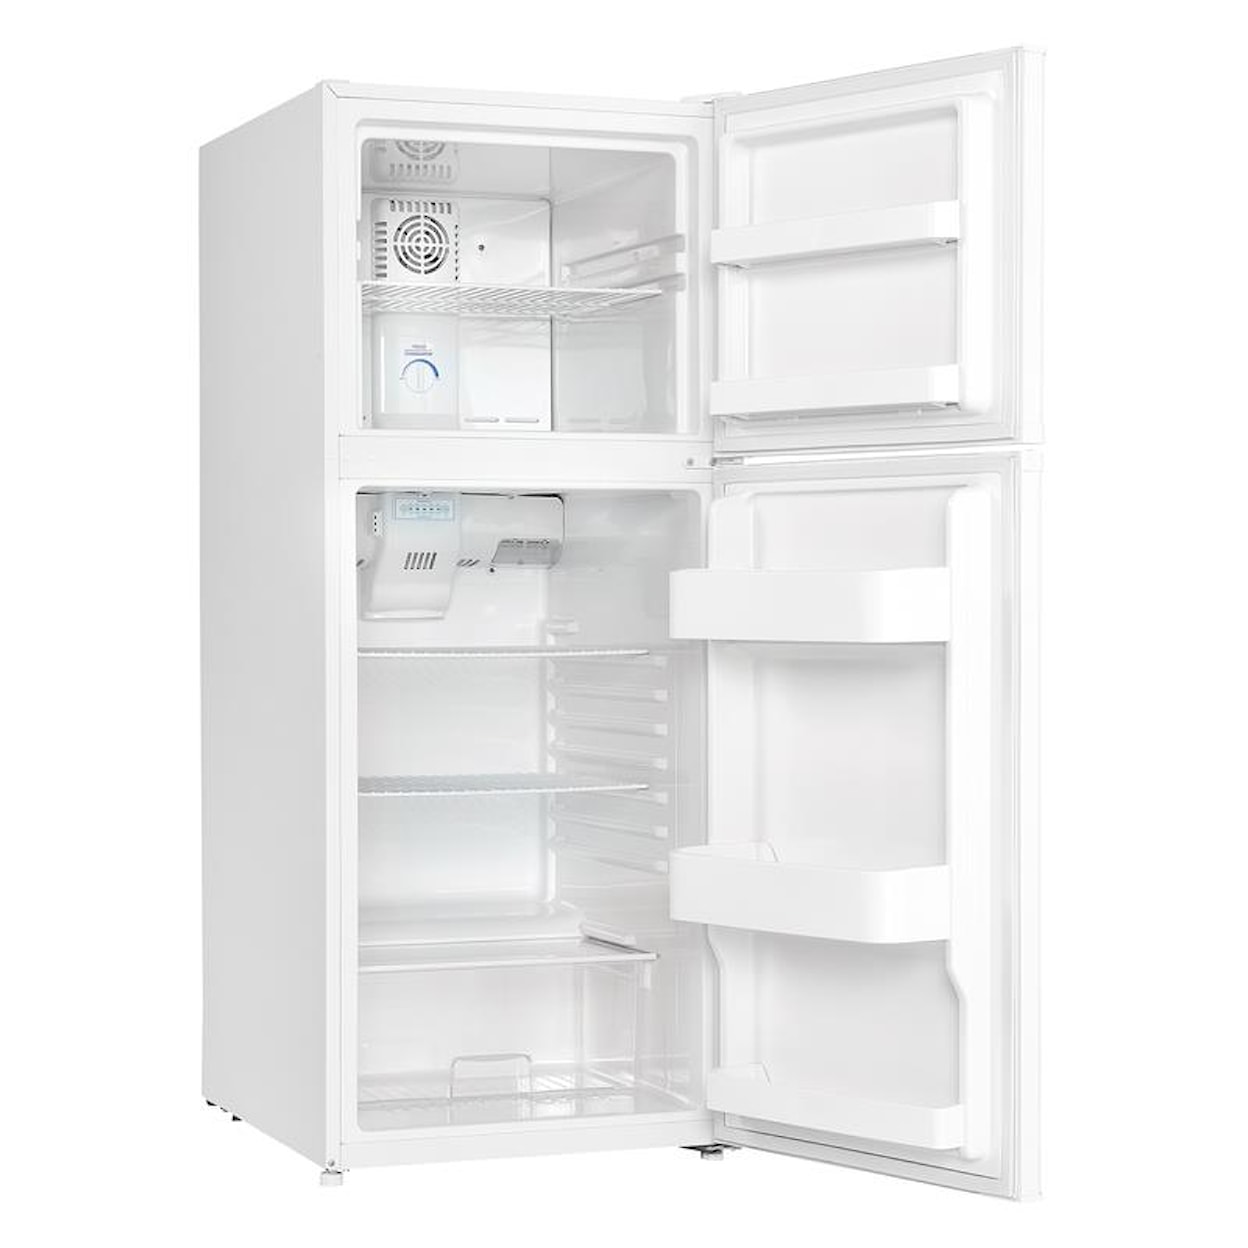 Danby Danby Mid-Size Refrigerators 12.3 Cu. Ft. Mid-Size Refrigerator